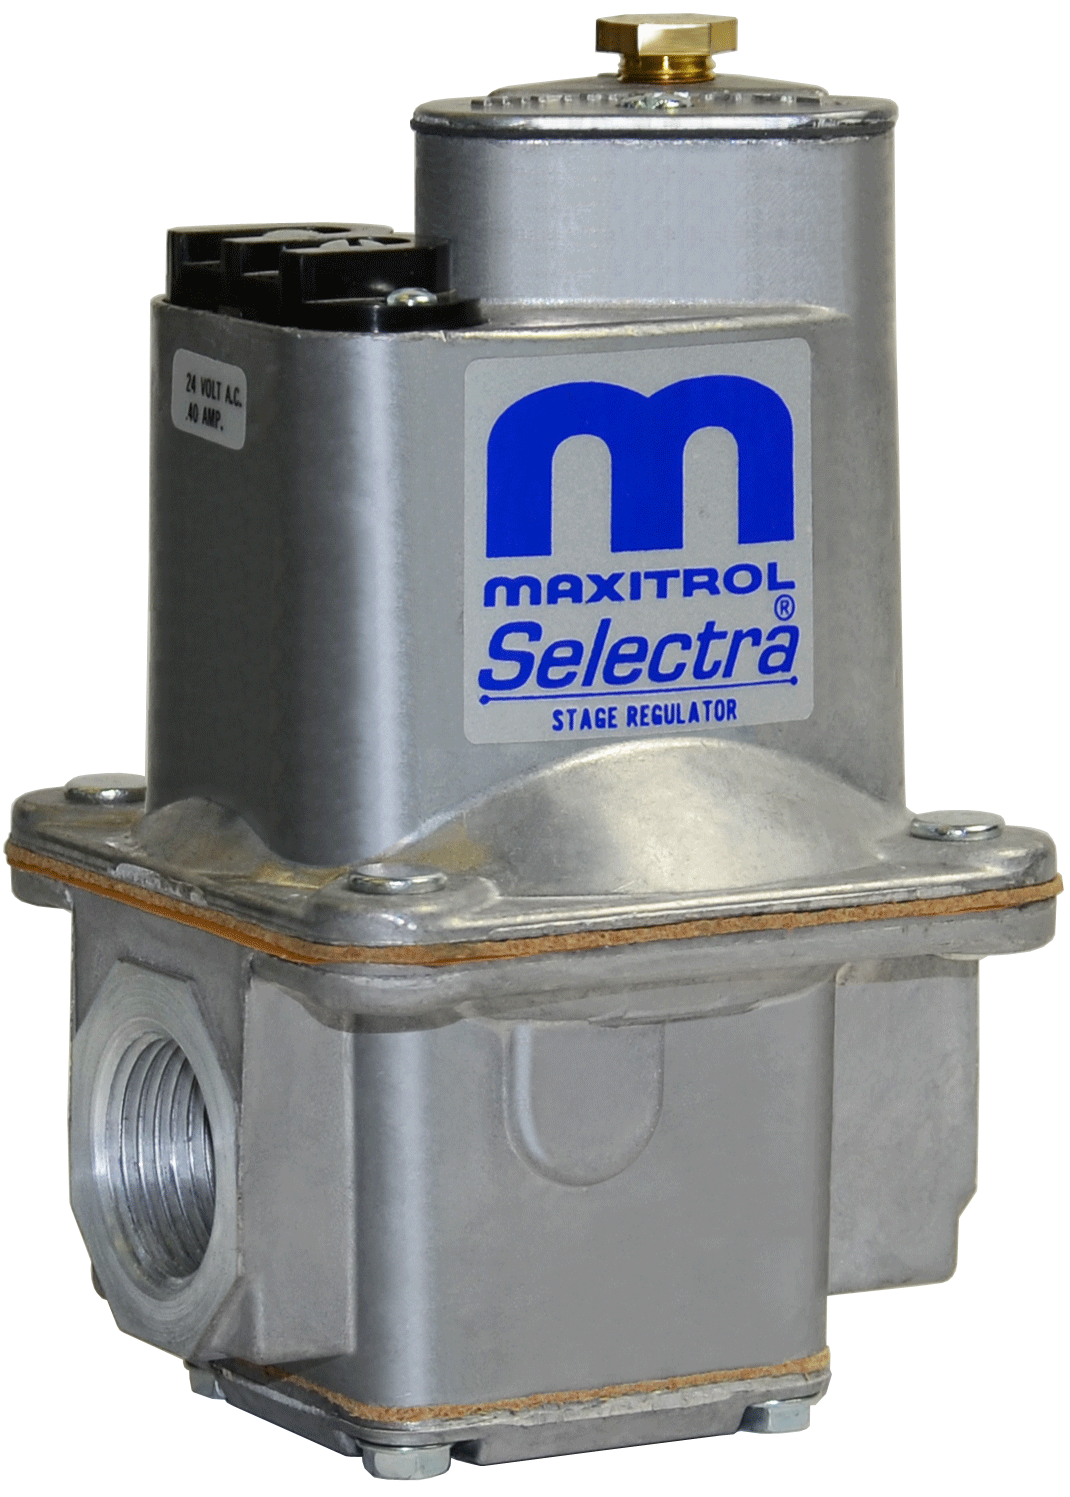 Maxitrol SR600-1-3/4" Gas Regulator 2-Stage 3/4" NPT